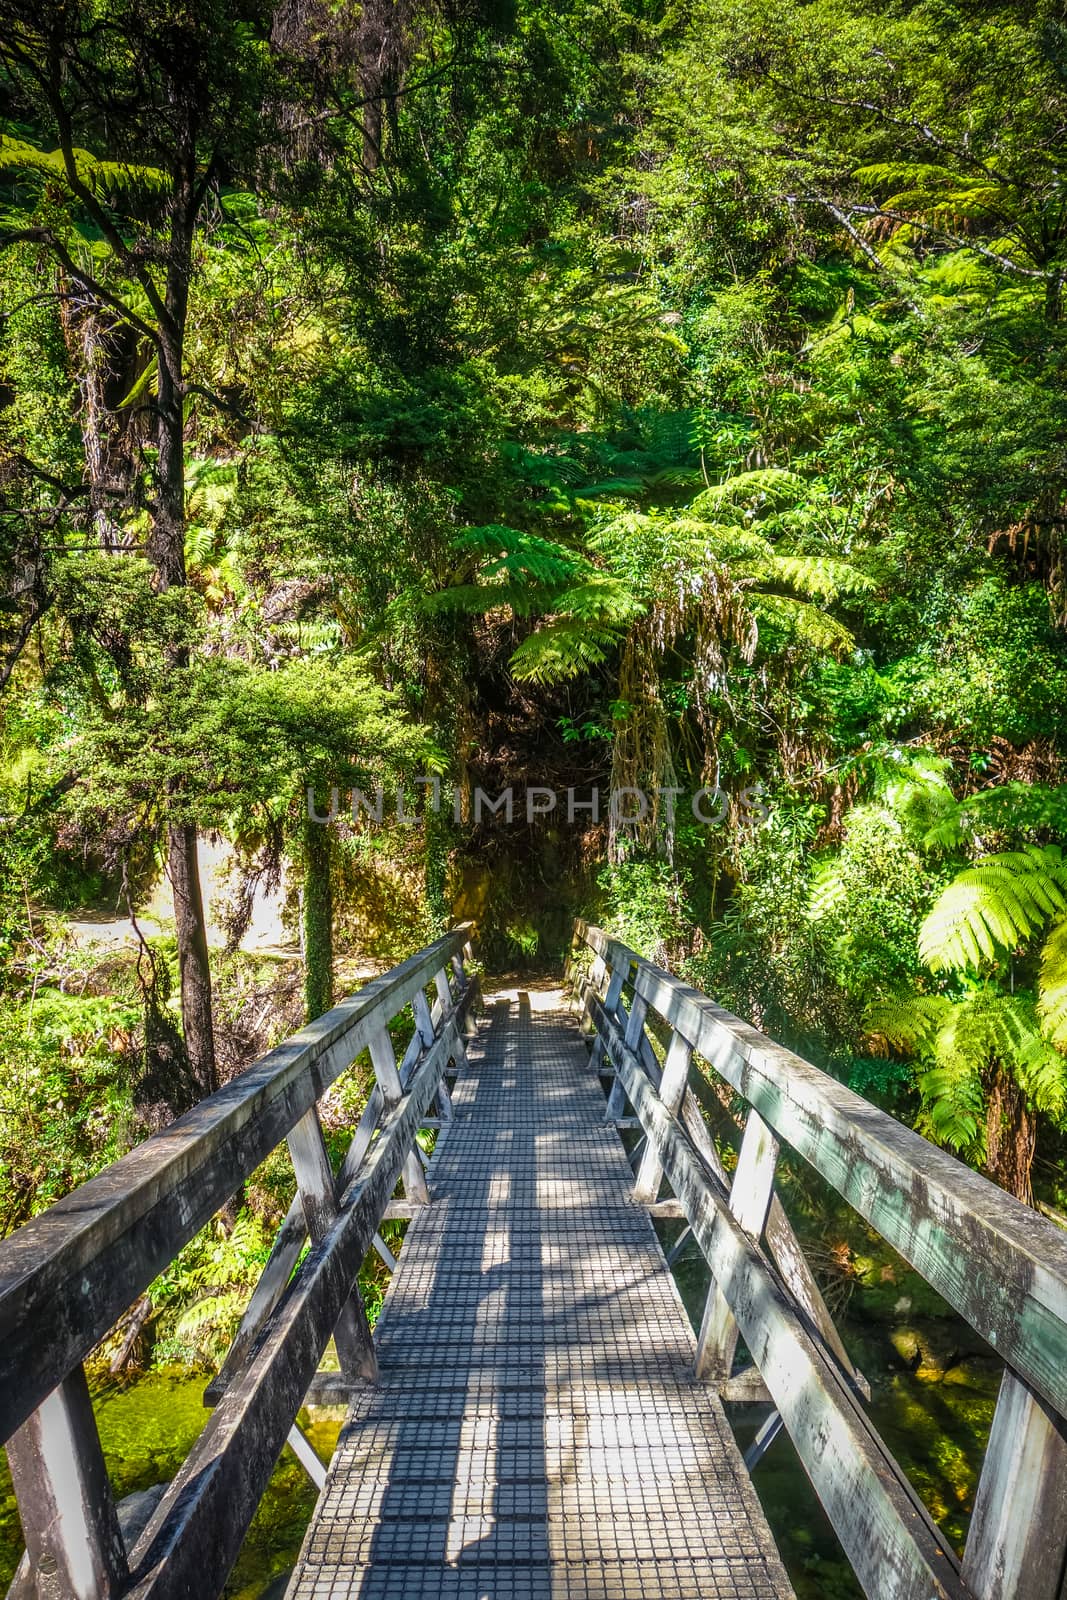 Bridge on a river. Abel Tasman National Park, New Zealand by daboost